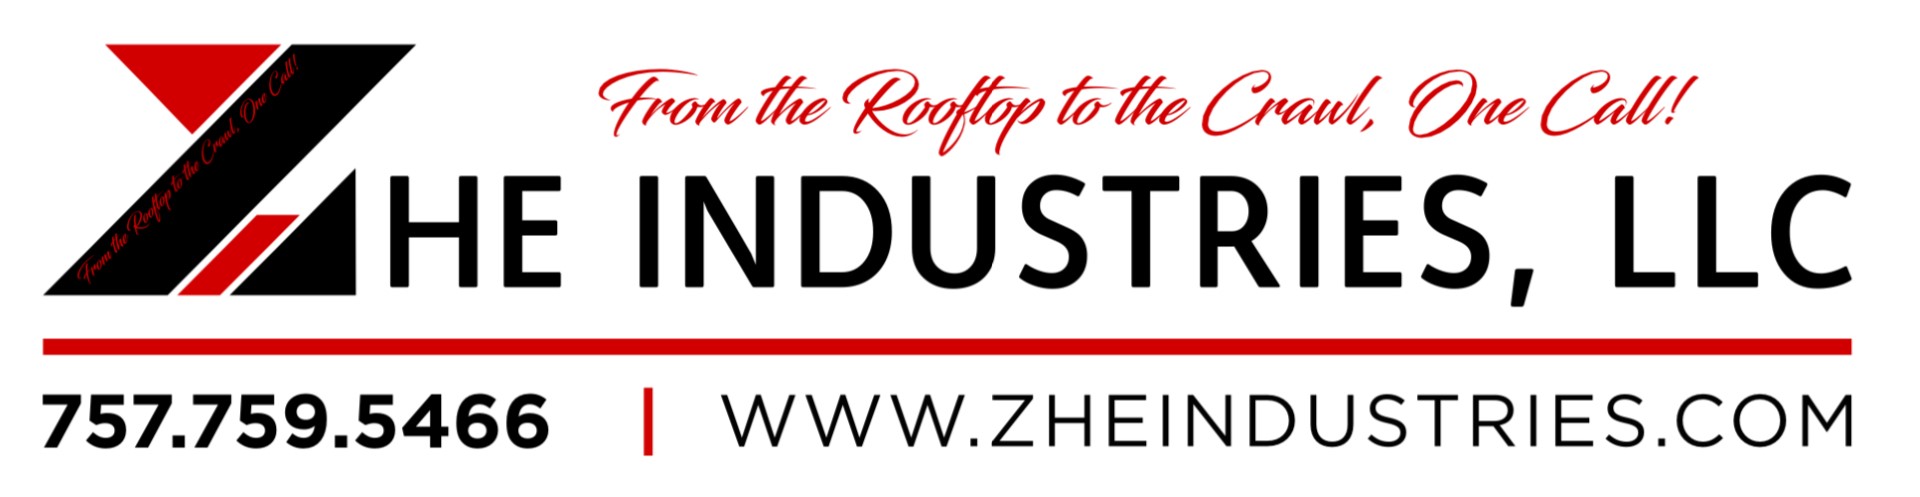 zhe industries logo high resolution